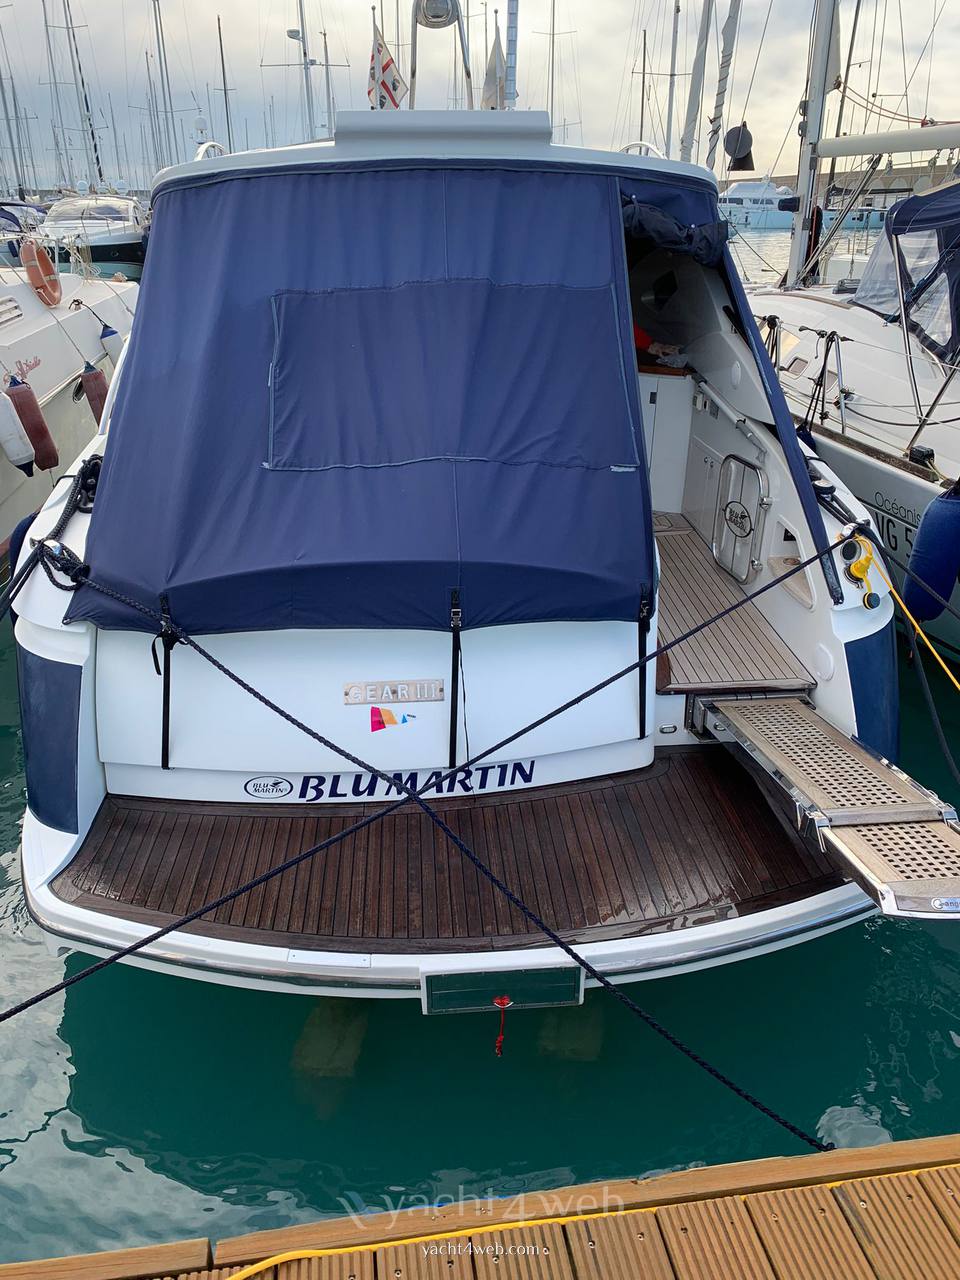 BLU MARTIN 13,50 sun top ht Motor boat used for sale